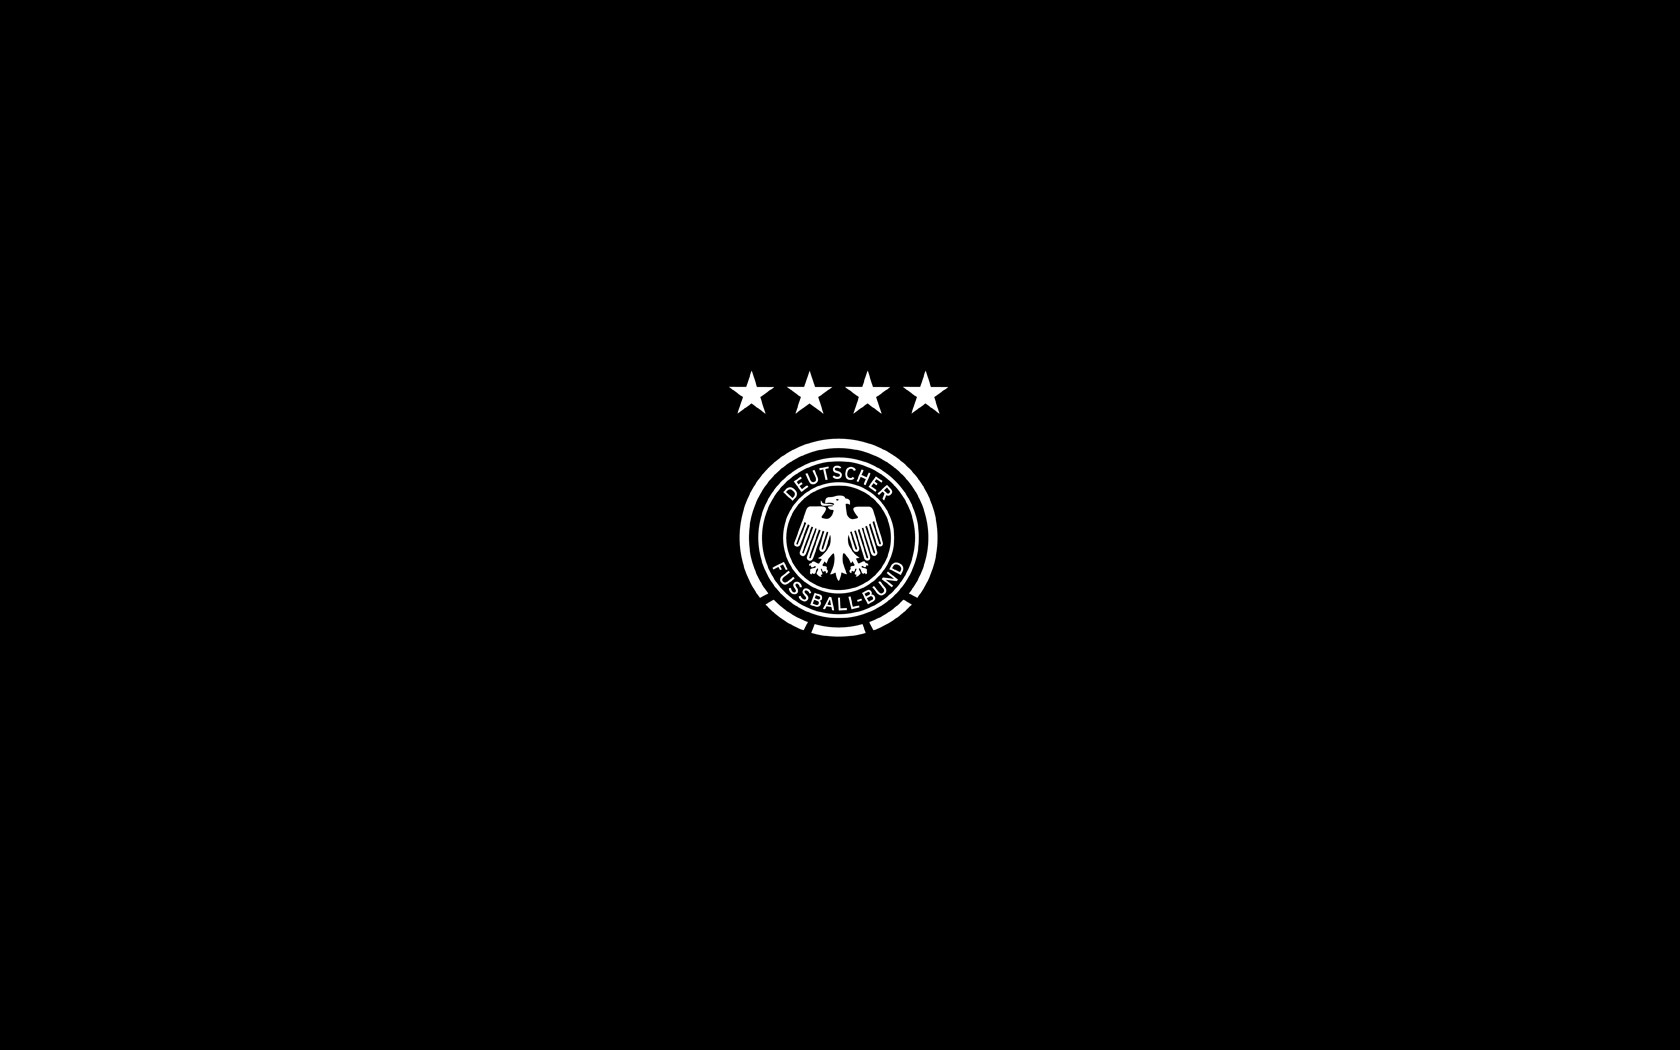 General 1680x1050 Germany soccer minimalism sport simple background logo